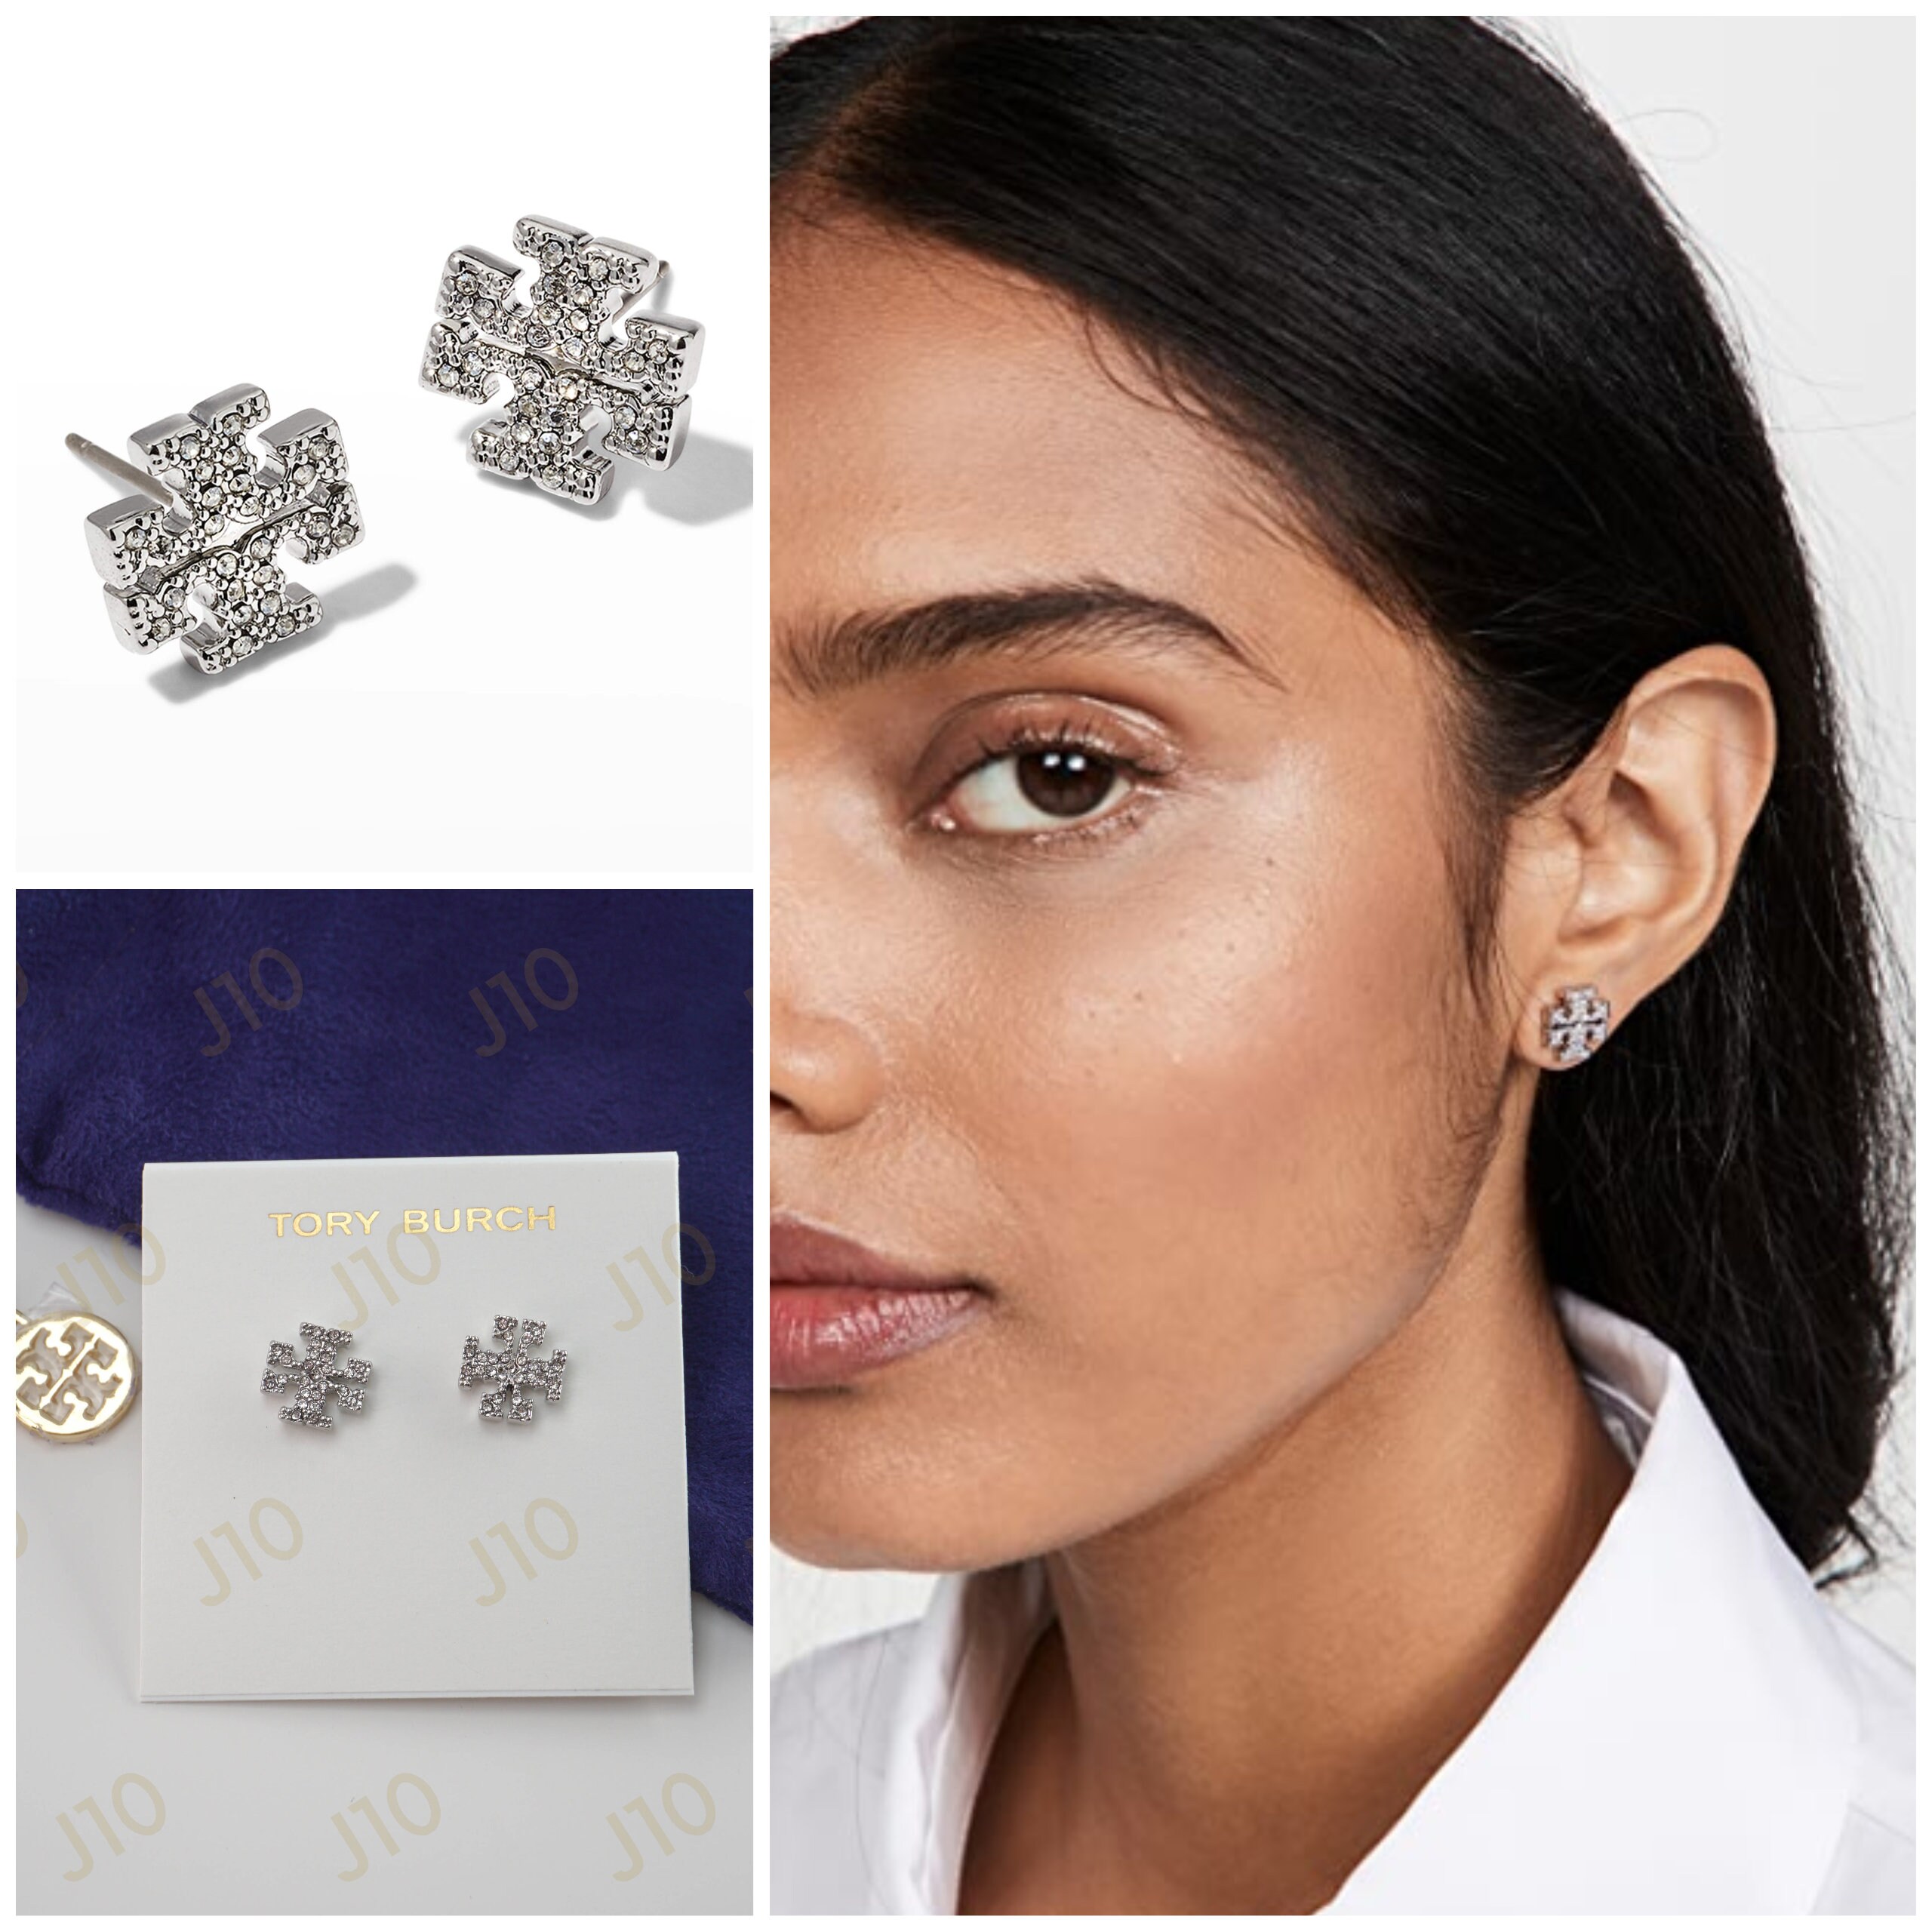 Tory Burch Kira Pavé Stud Earrings in Silver Brand New - Etsy Singapore